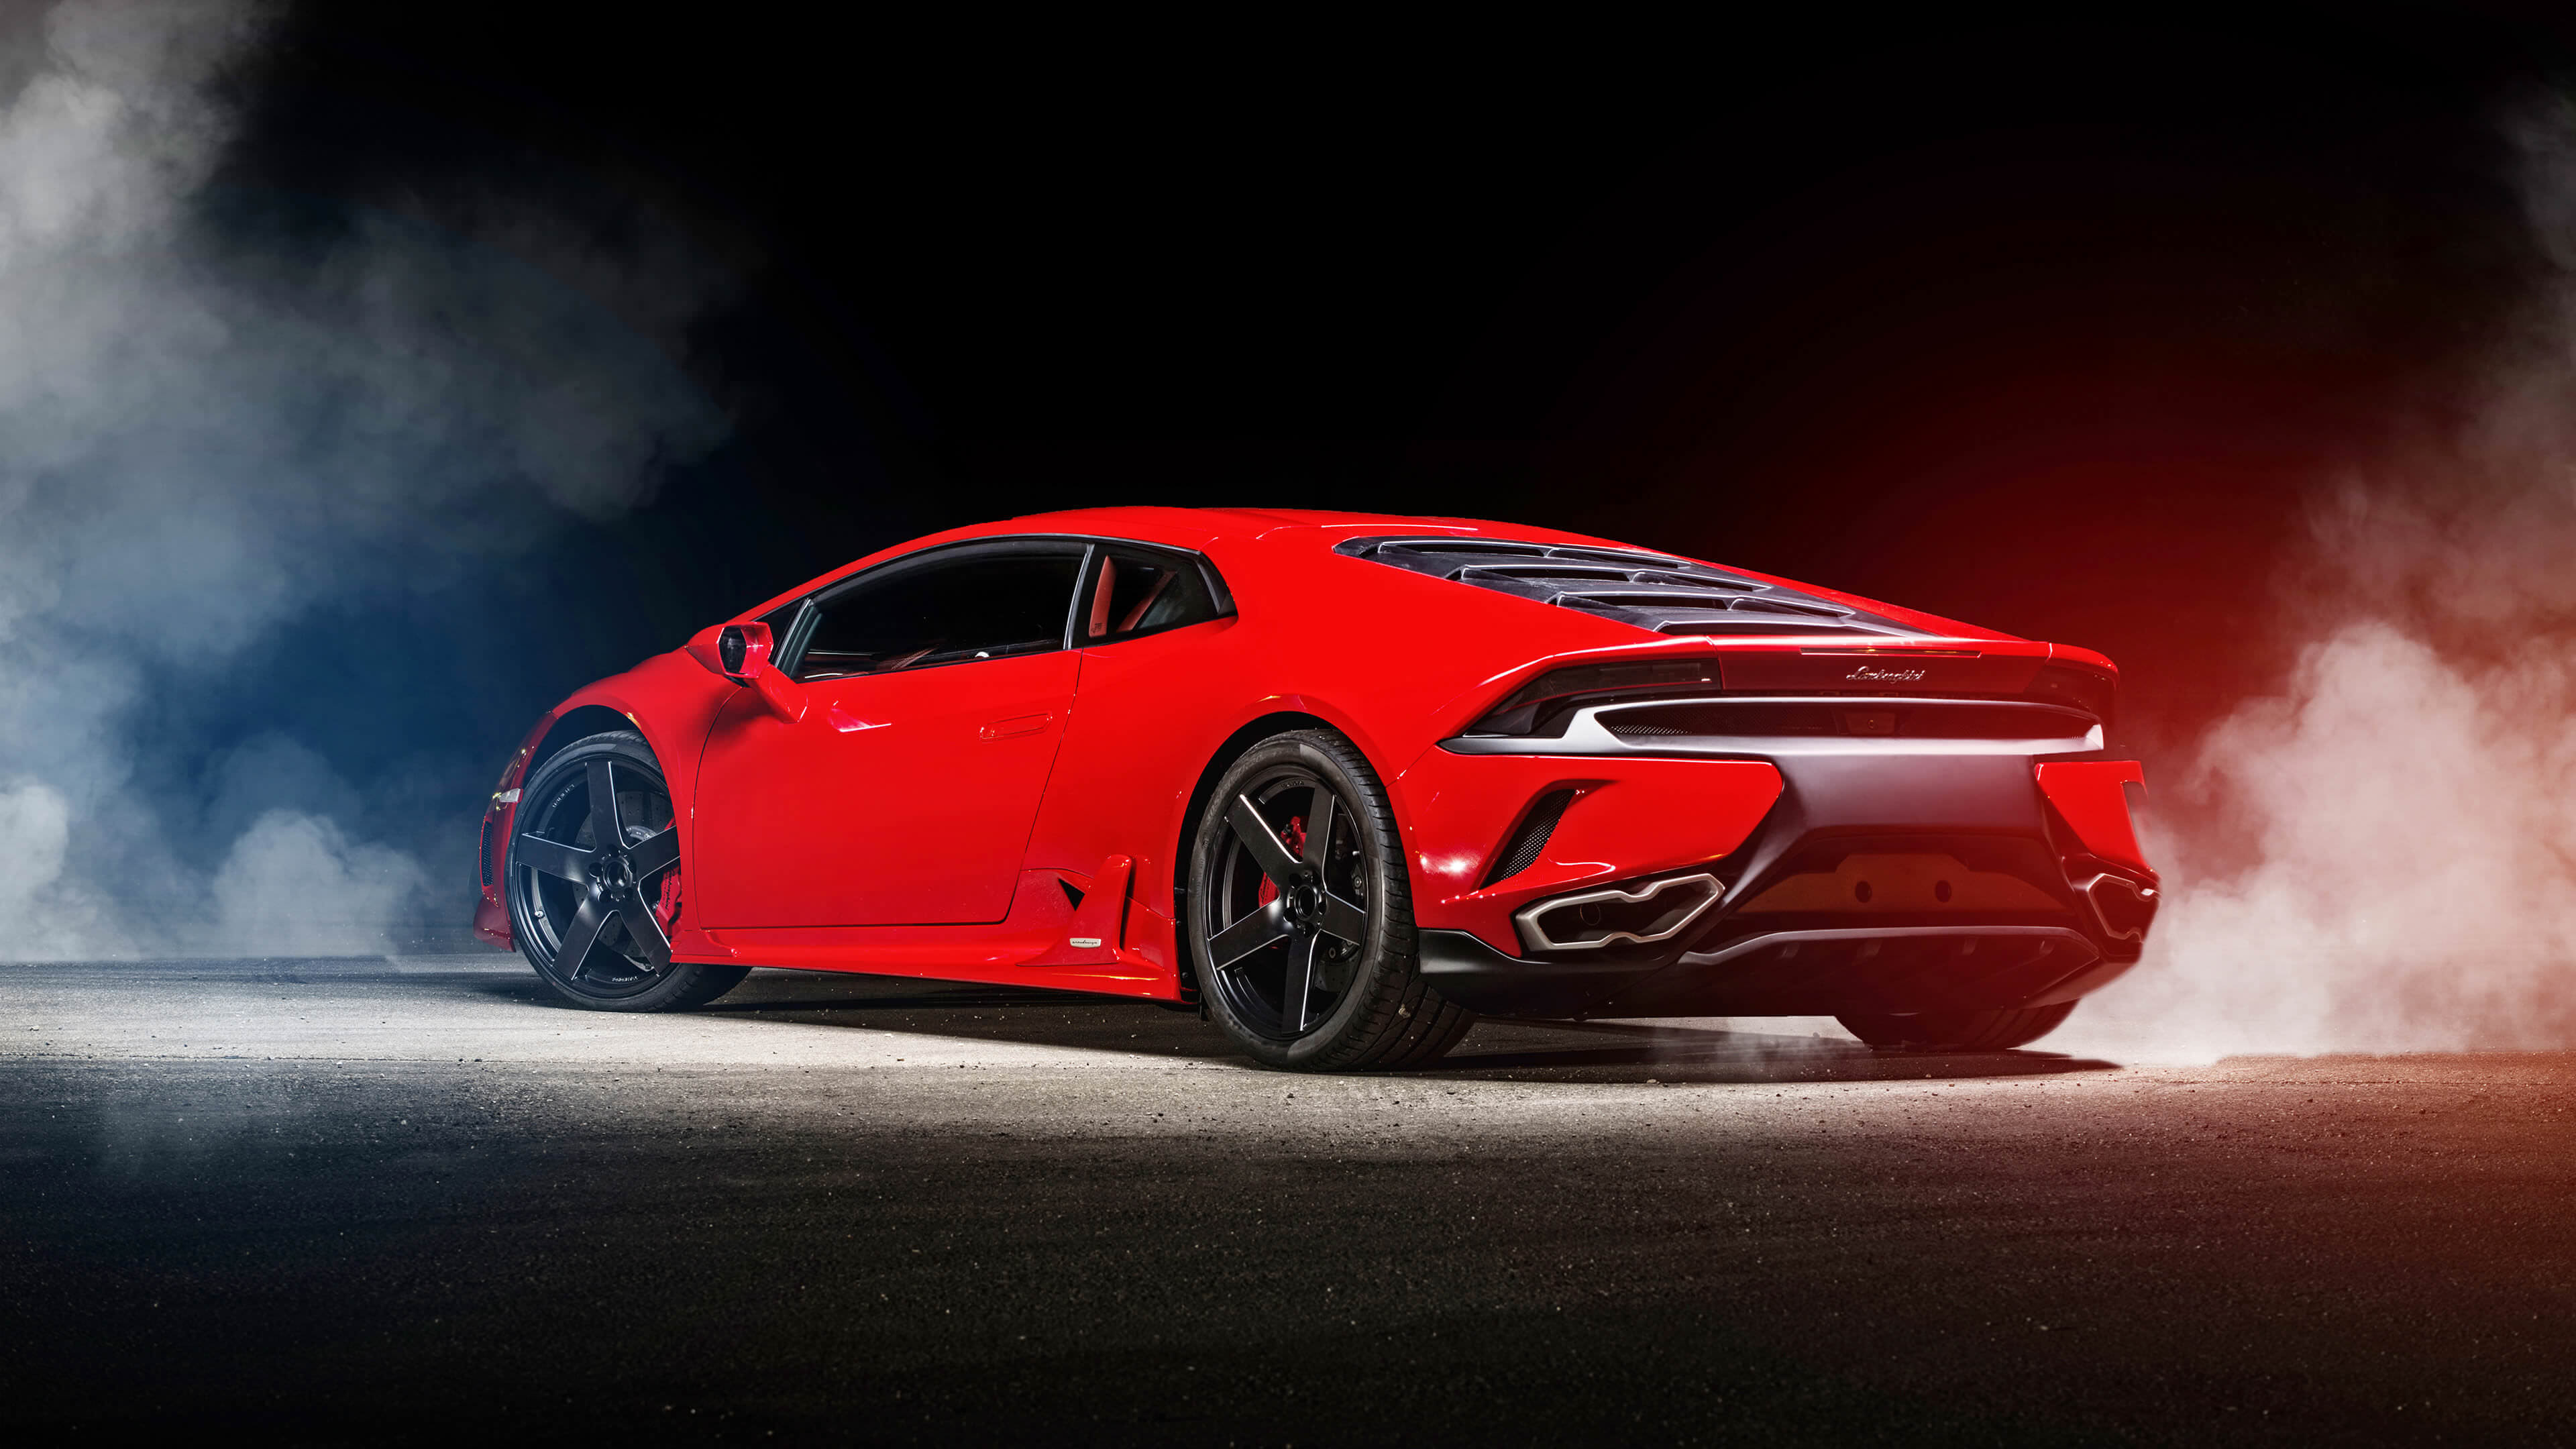 Lamborghini excellence, 4K resolution, Stunning details, High-performance power, 3840x2160 4K Desktop